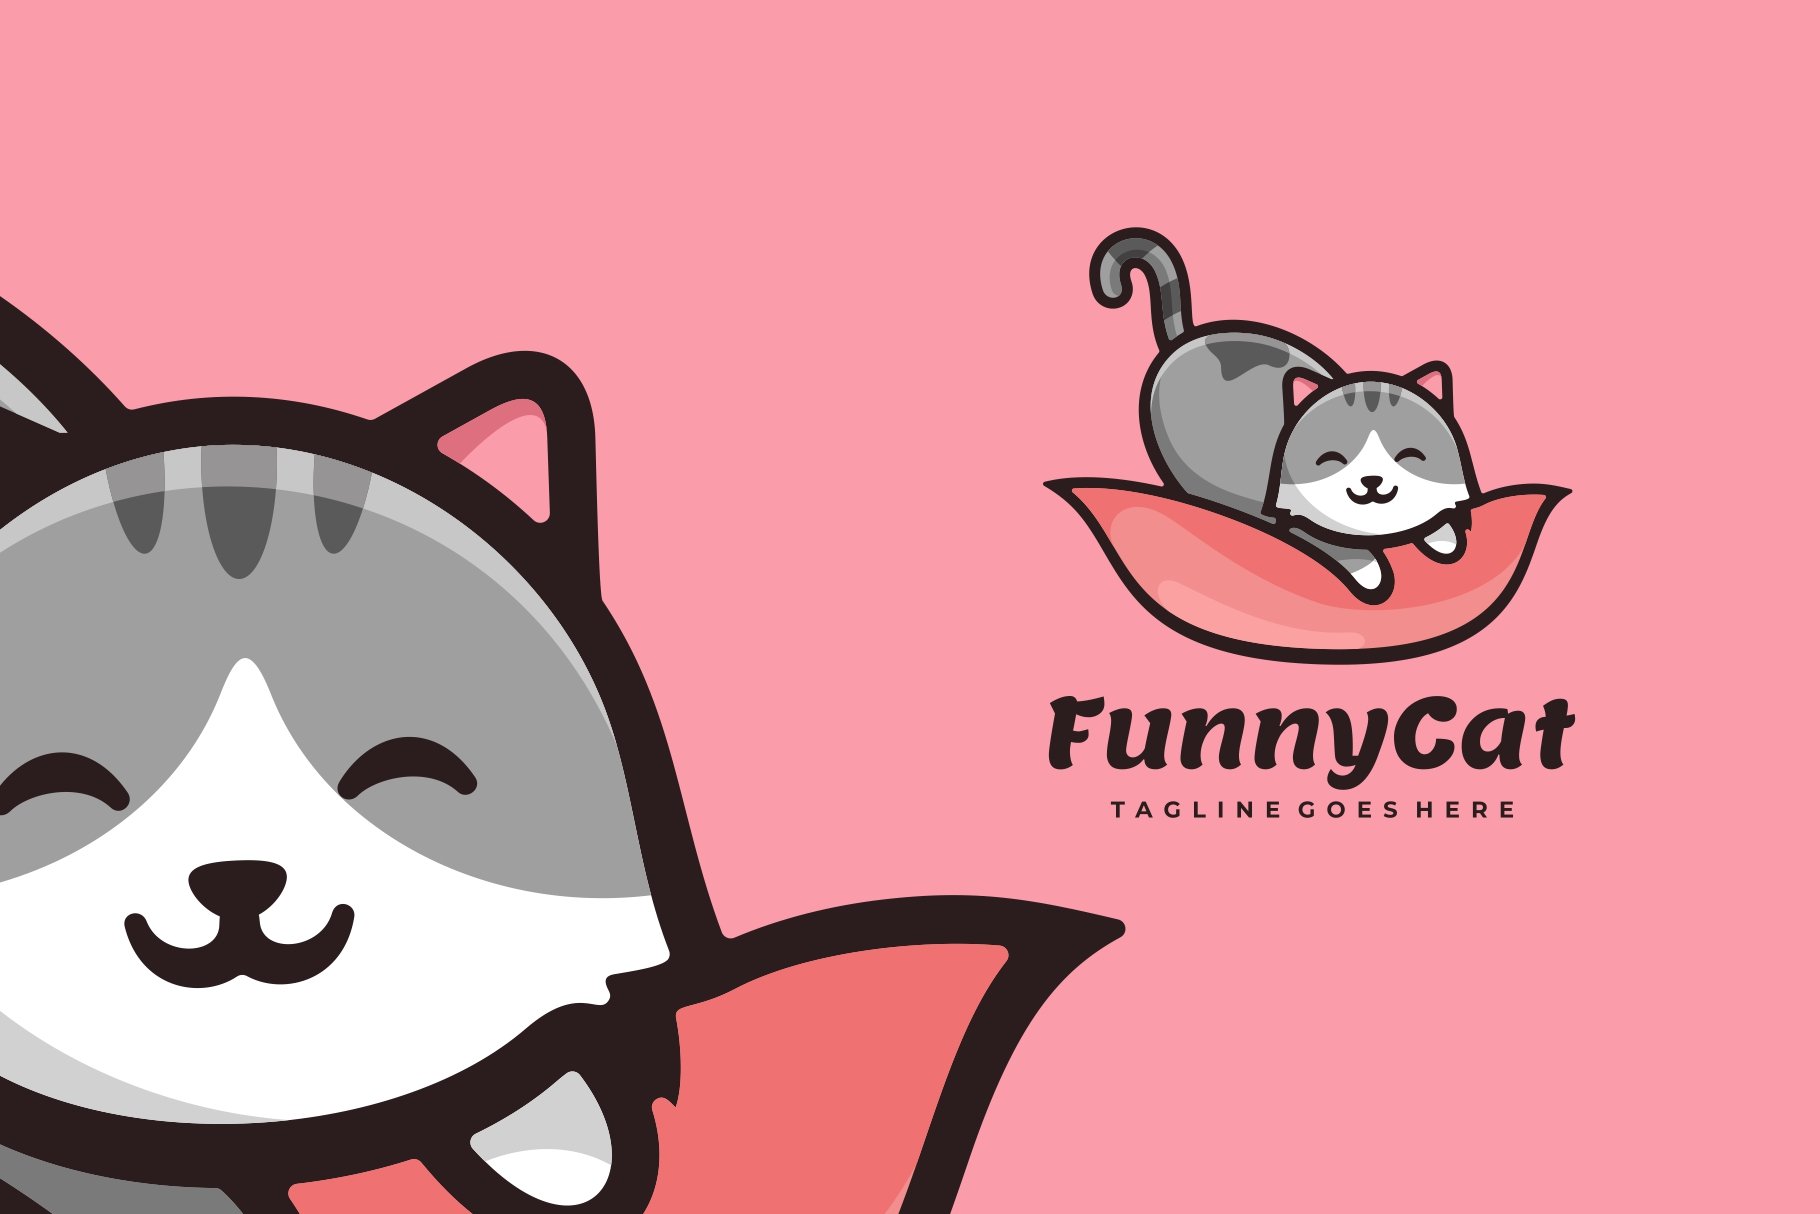 Cat Simple Mascot Logo cover image.